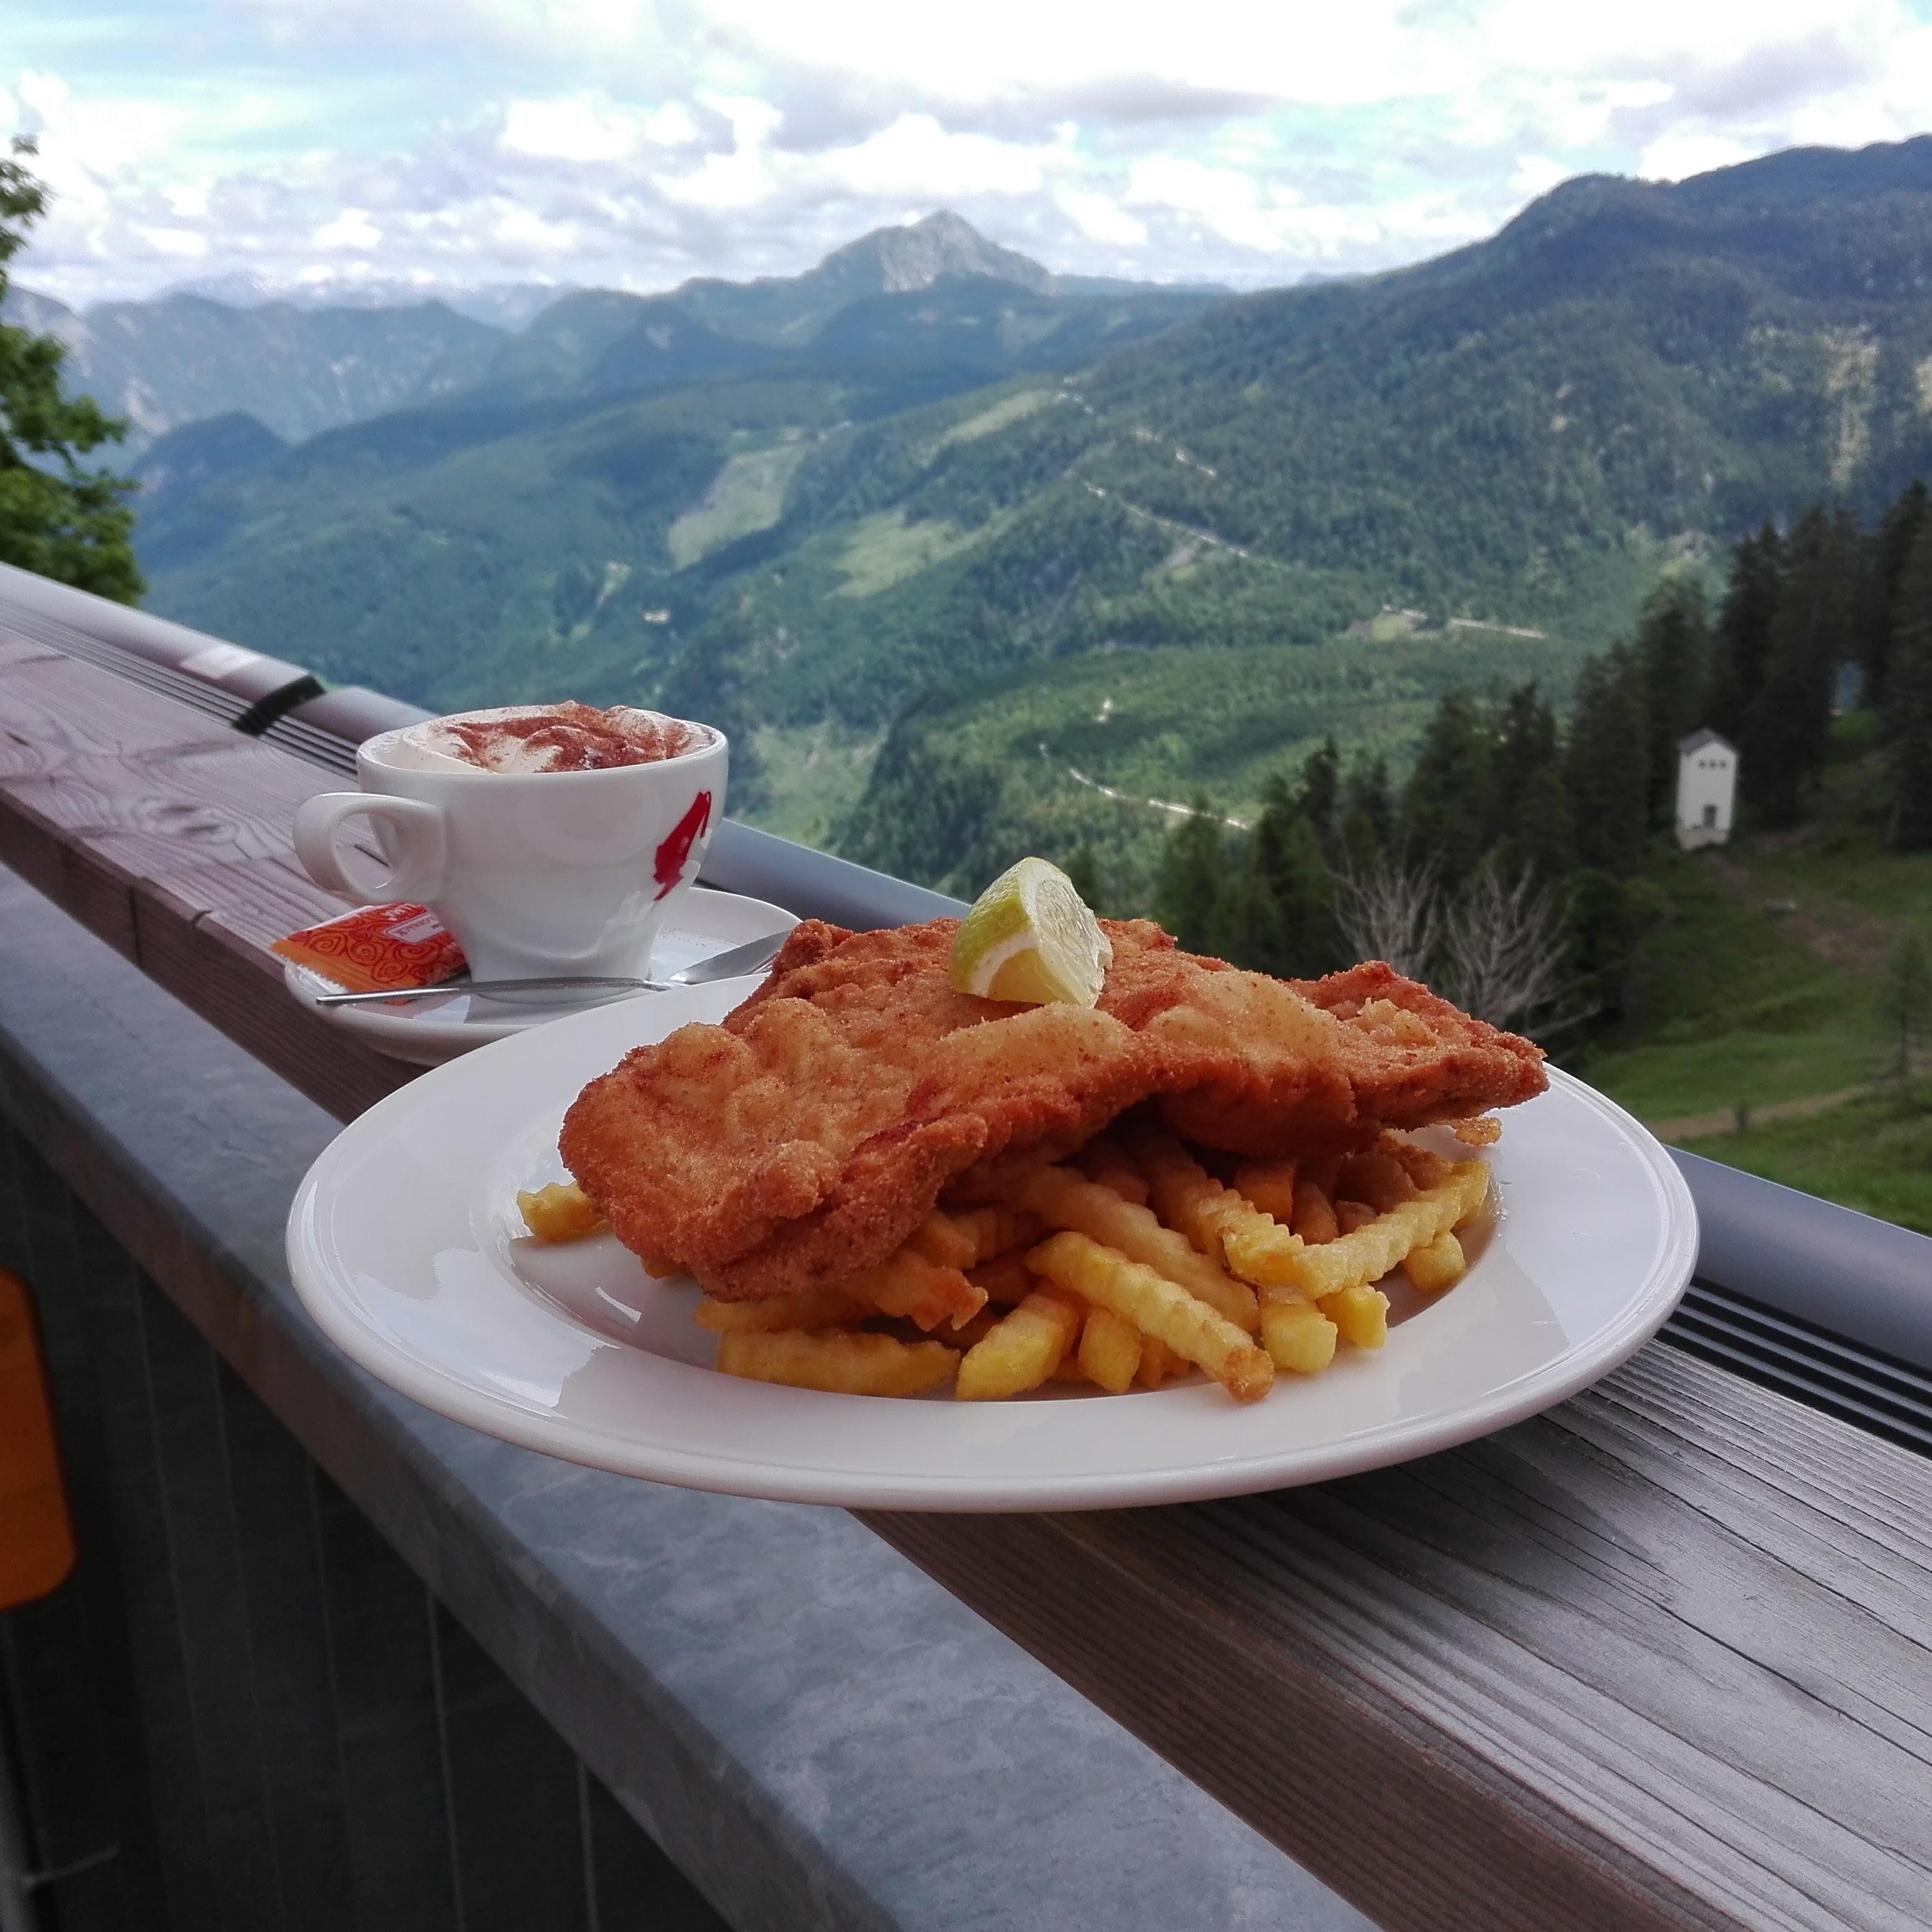 Wiener schnitzel az Alpokban.